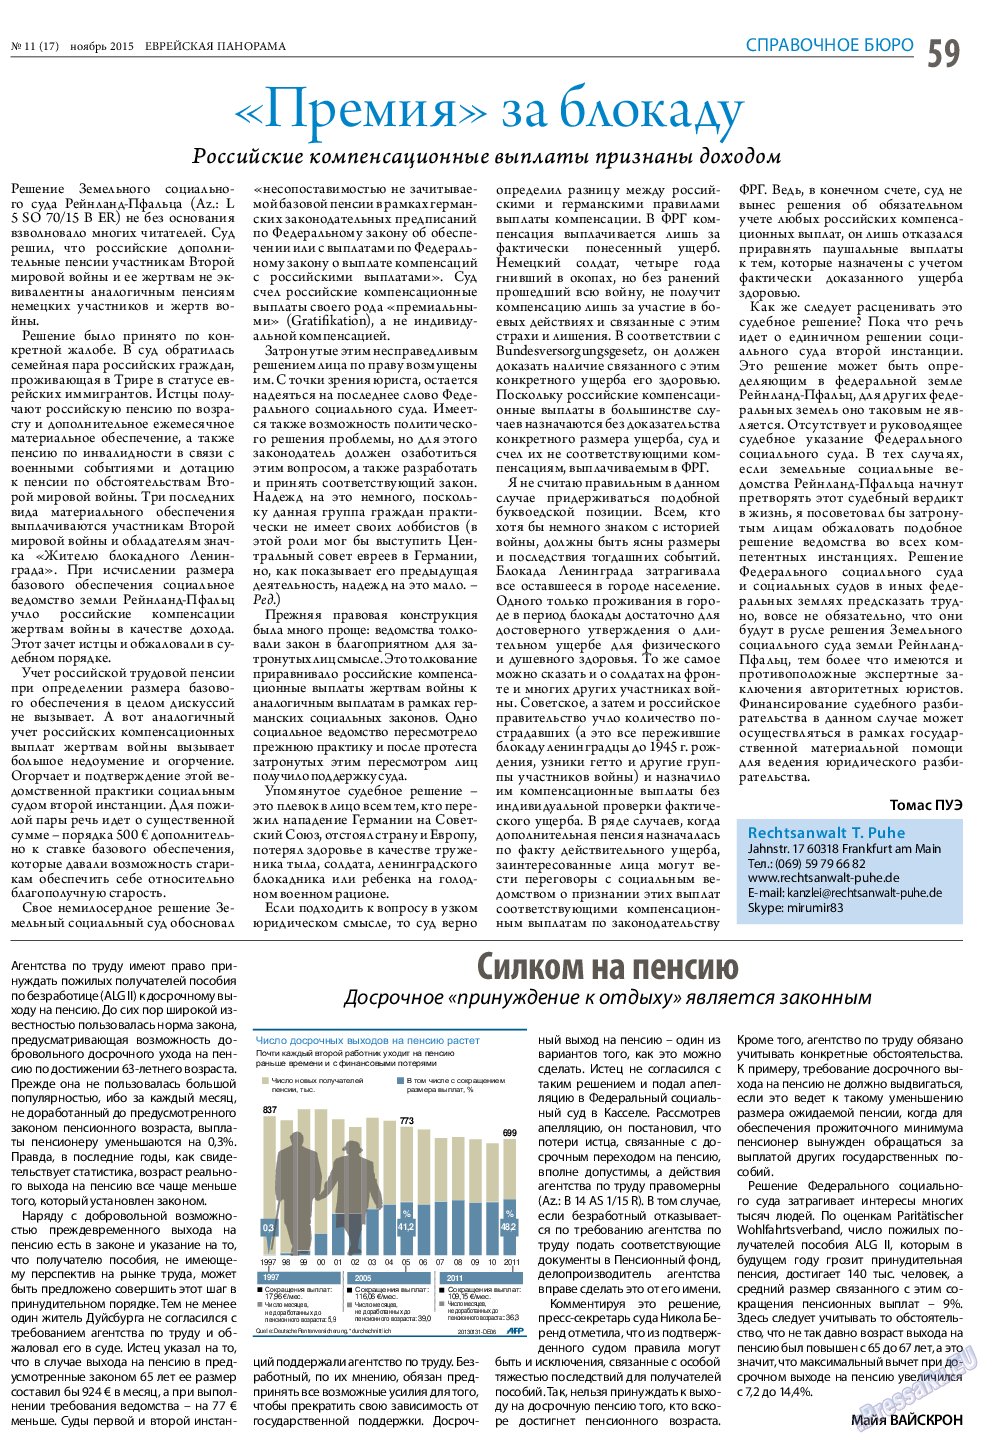 Еврейская панорама, газета. 2015 №11 стр.59